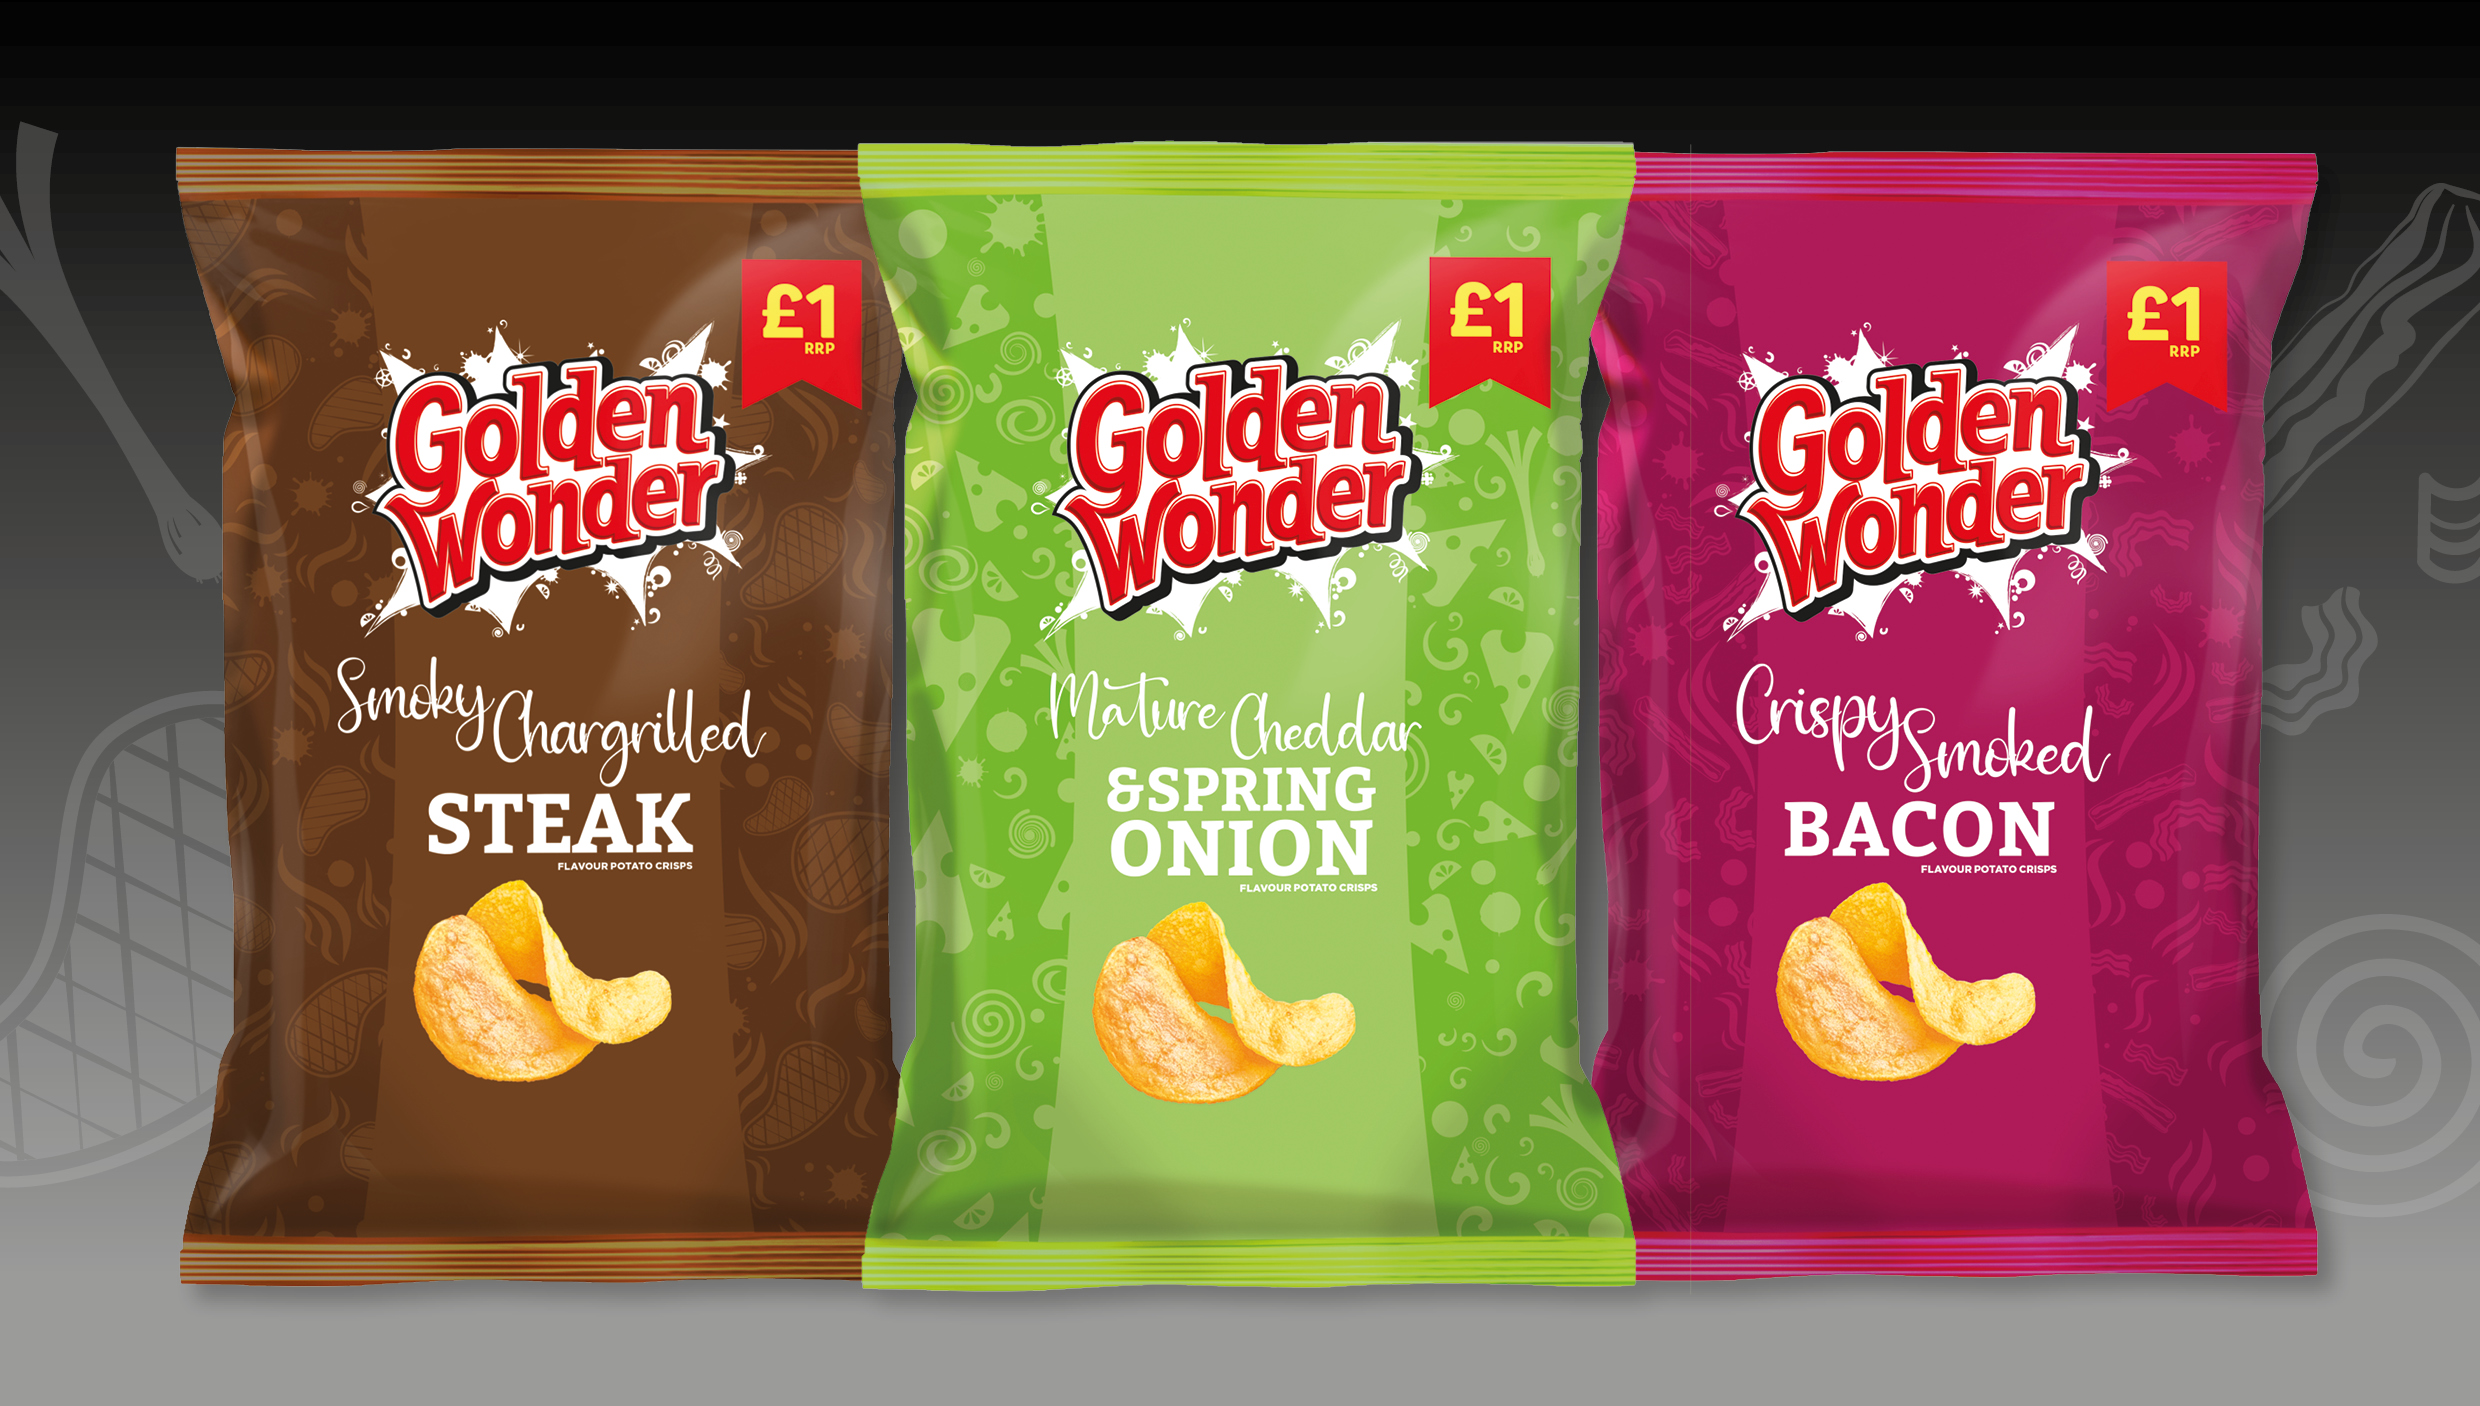 Golden Wonder open crunchy new £1 PMP sharing packs